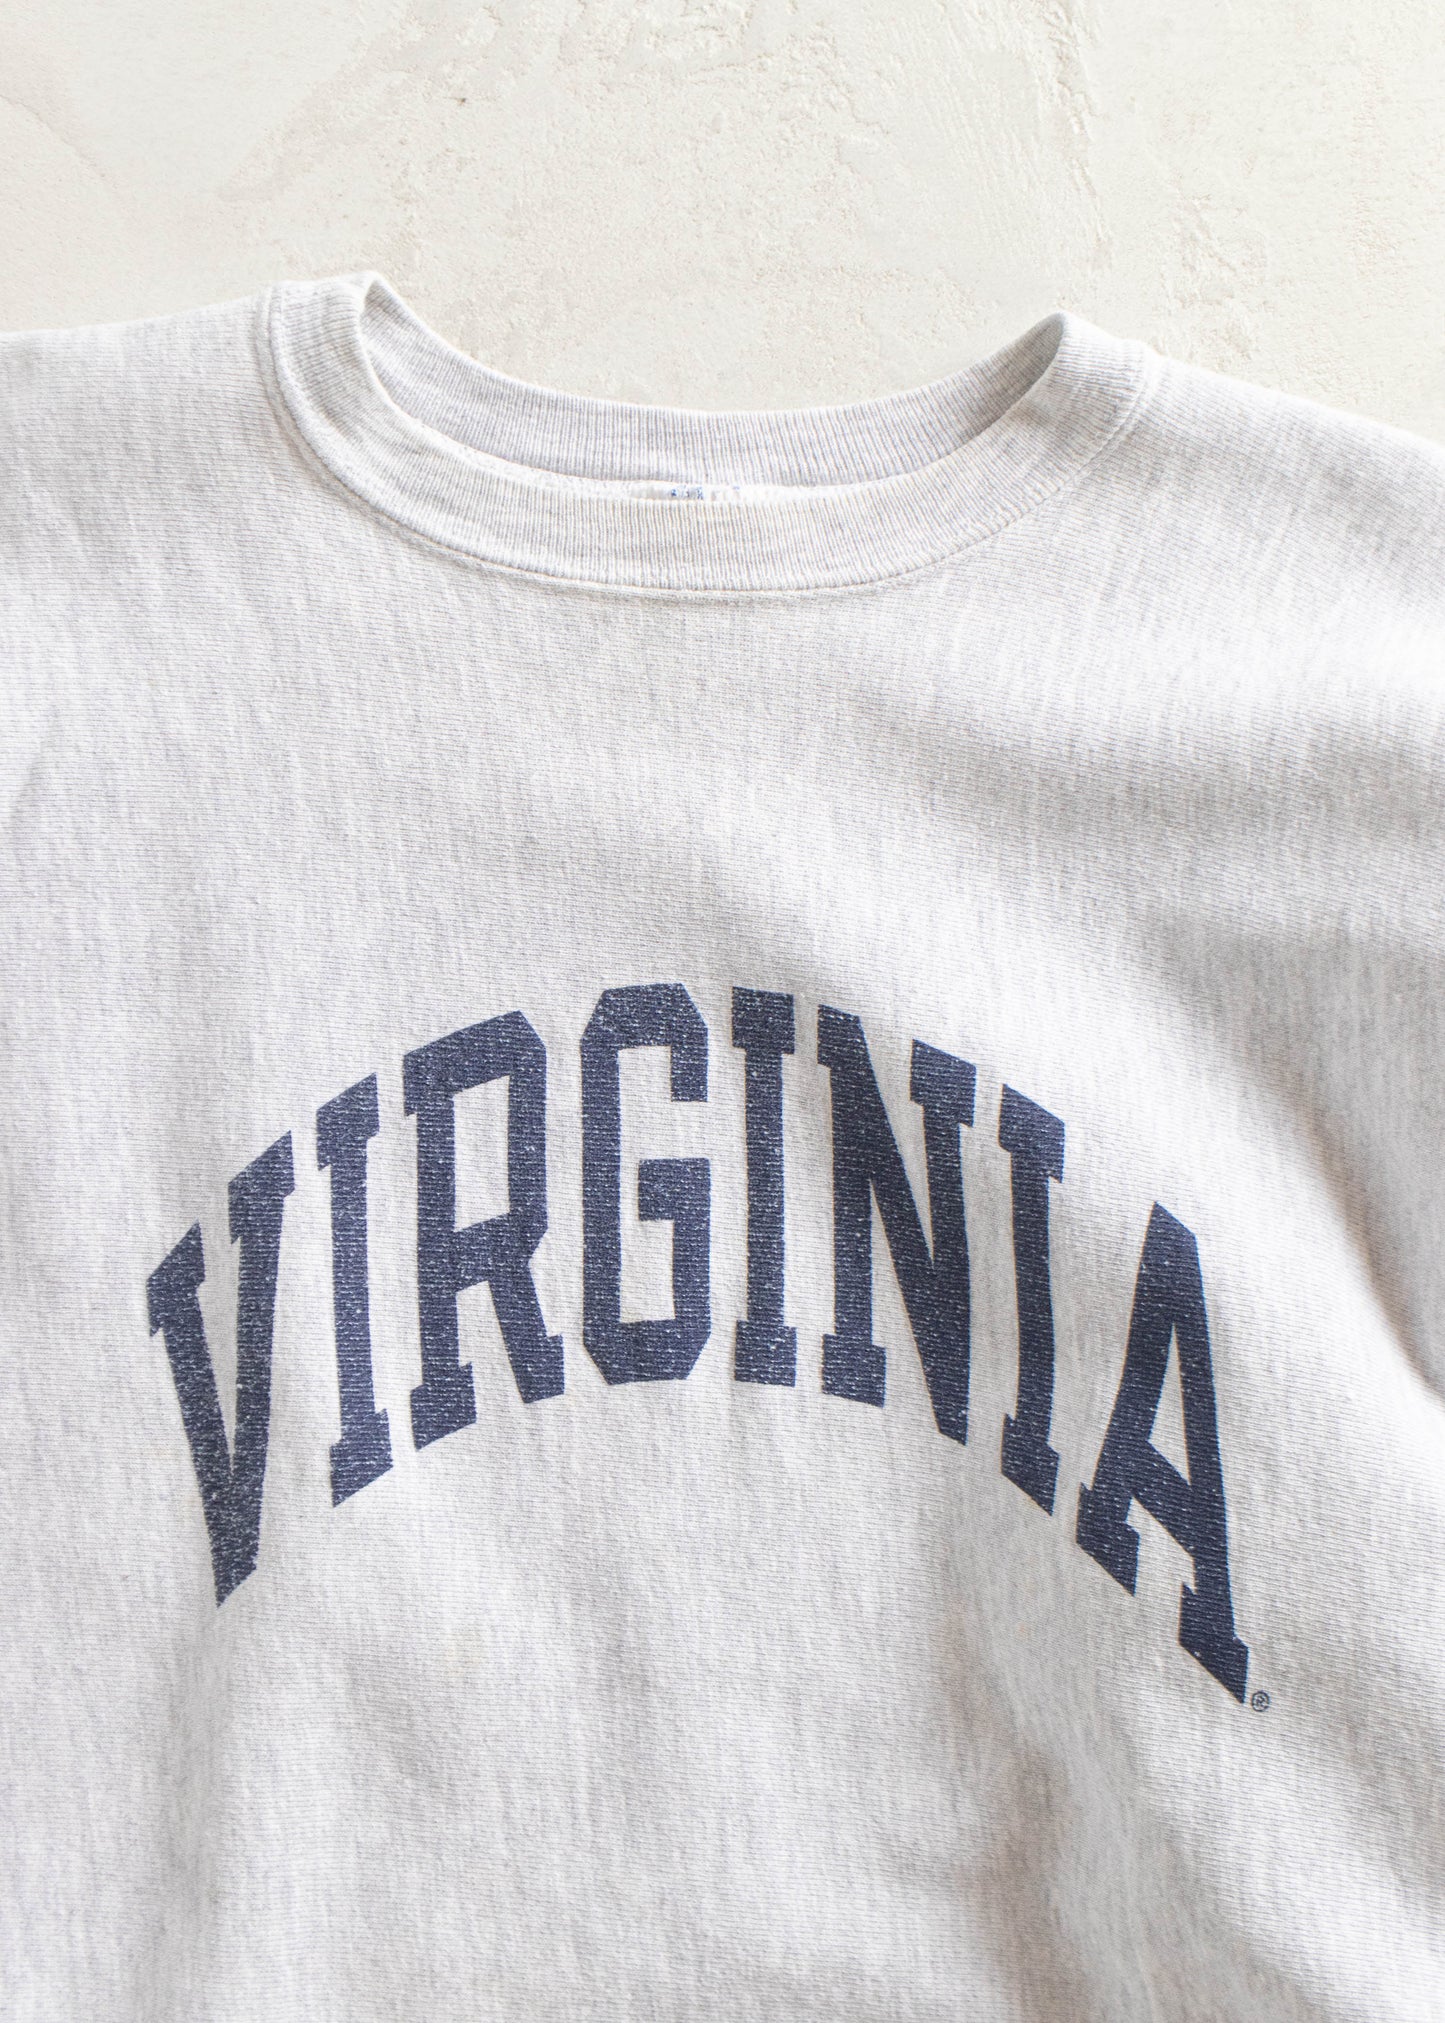 Vintage 1990s Champion Reverse Weave Virginia Sweatshirt Size M/L